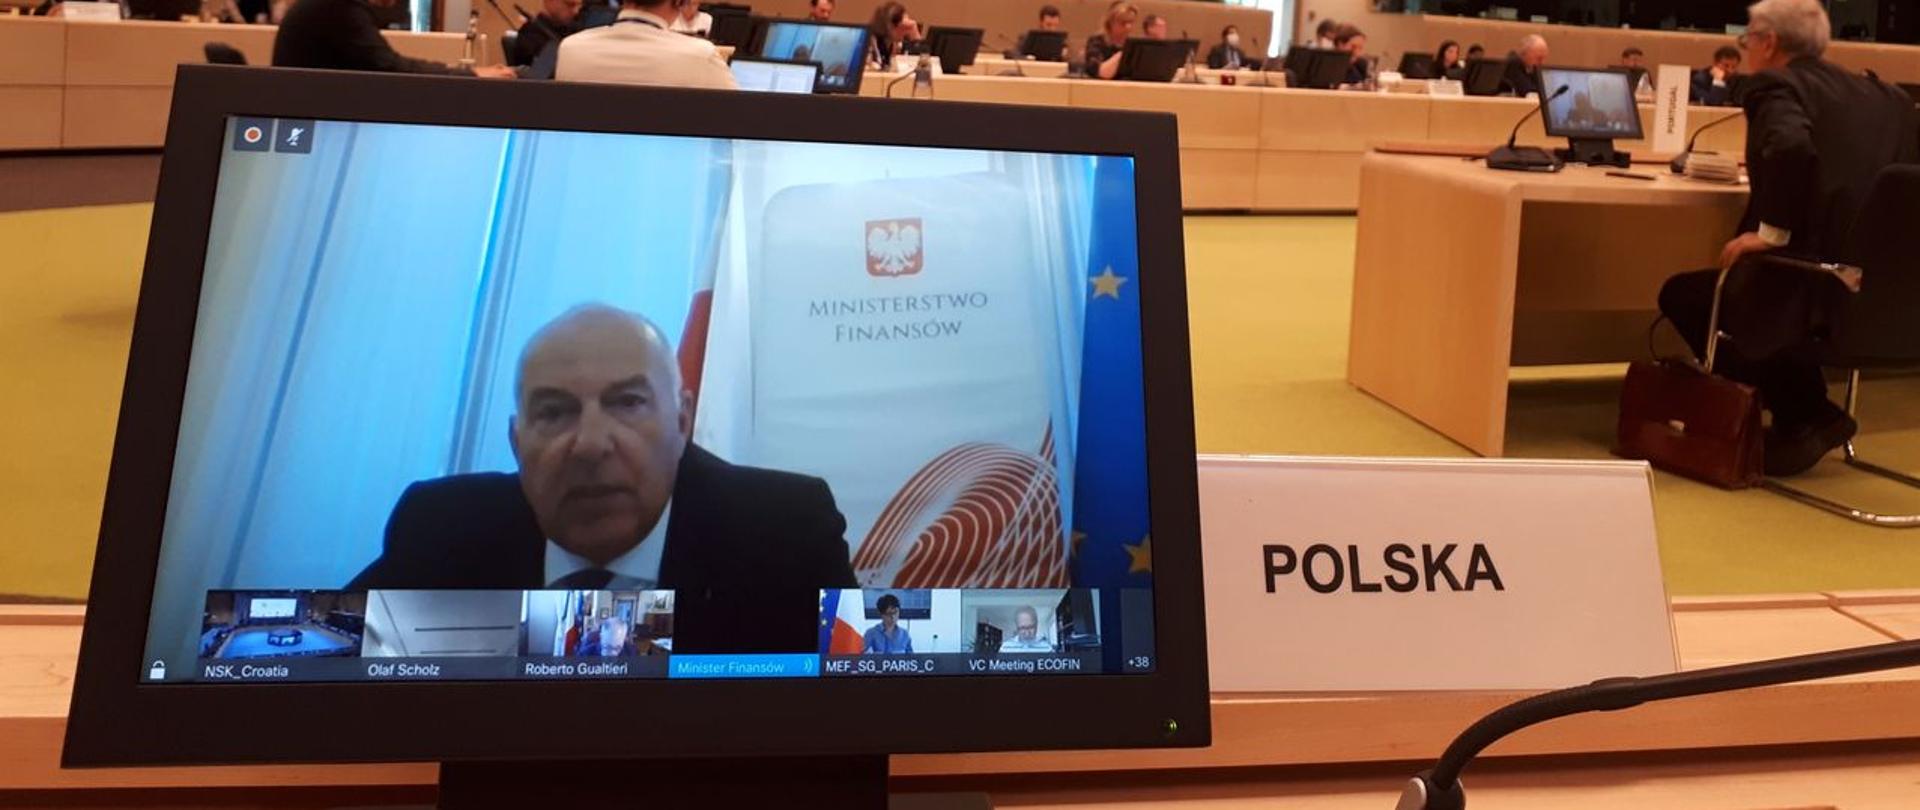 Minister Kościński na ekranie komputera podczas wideokonferencji, obok monitora napis Polska.